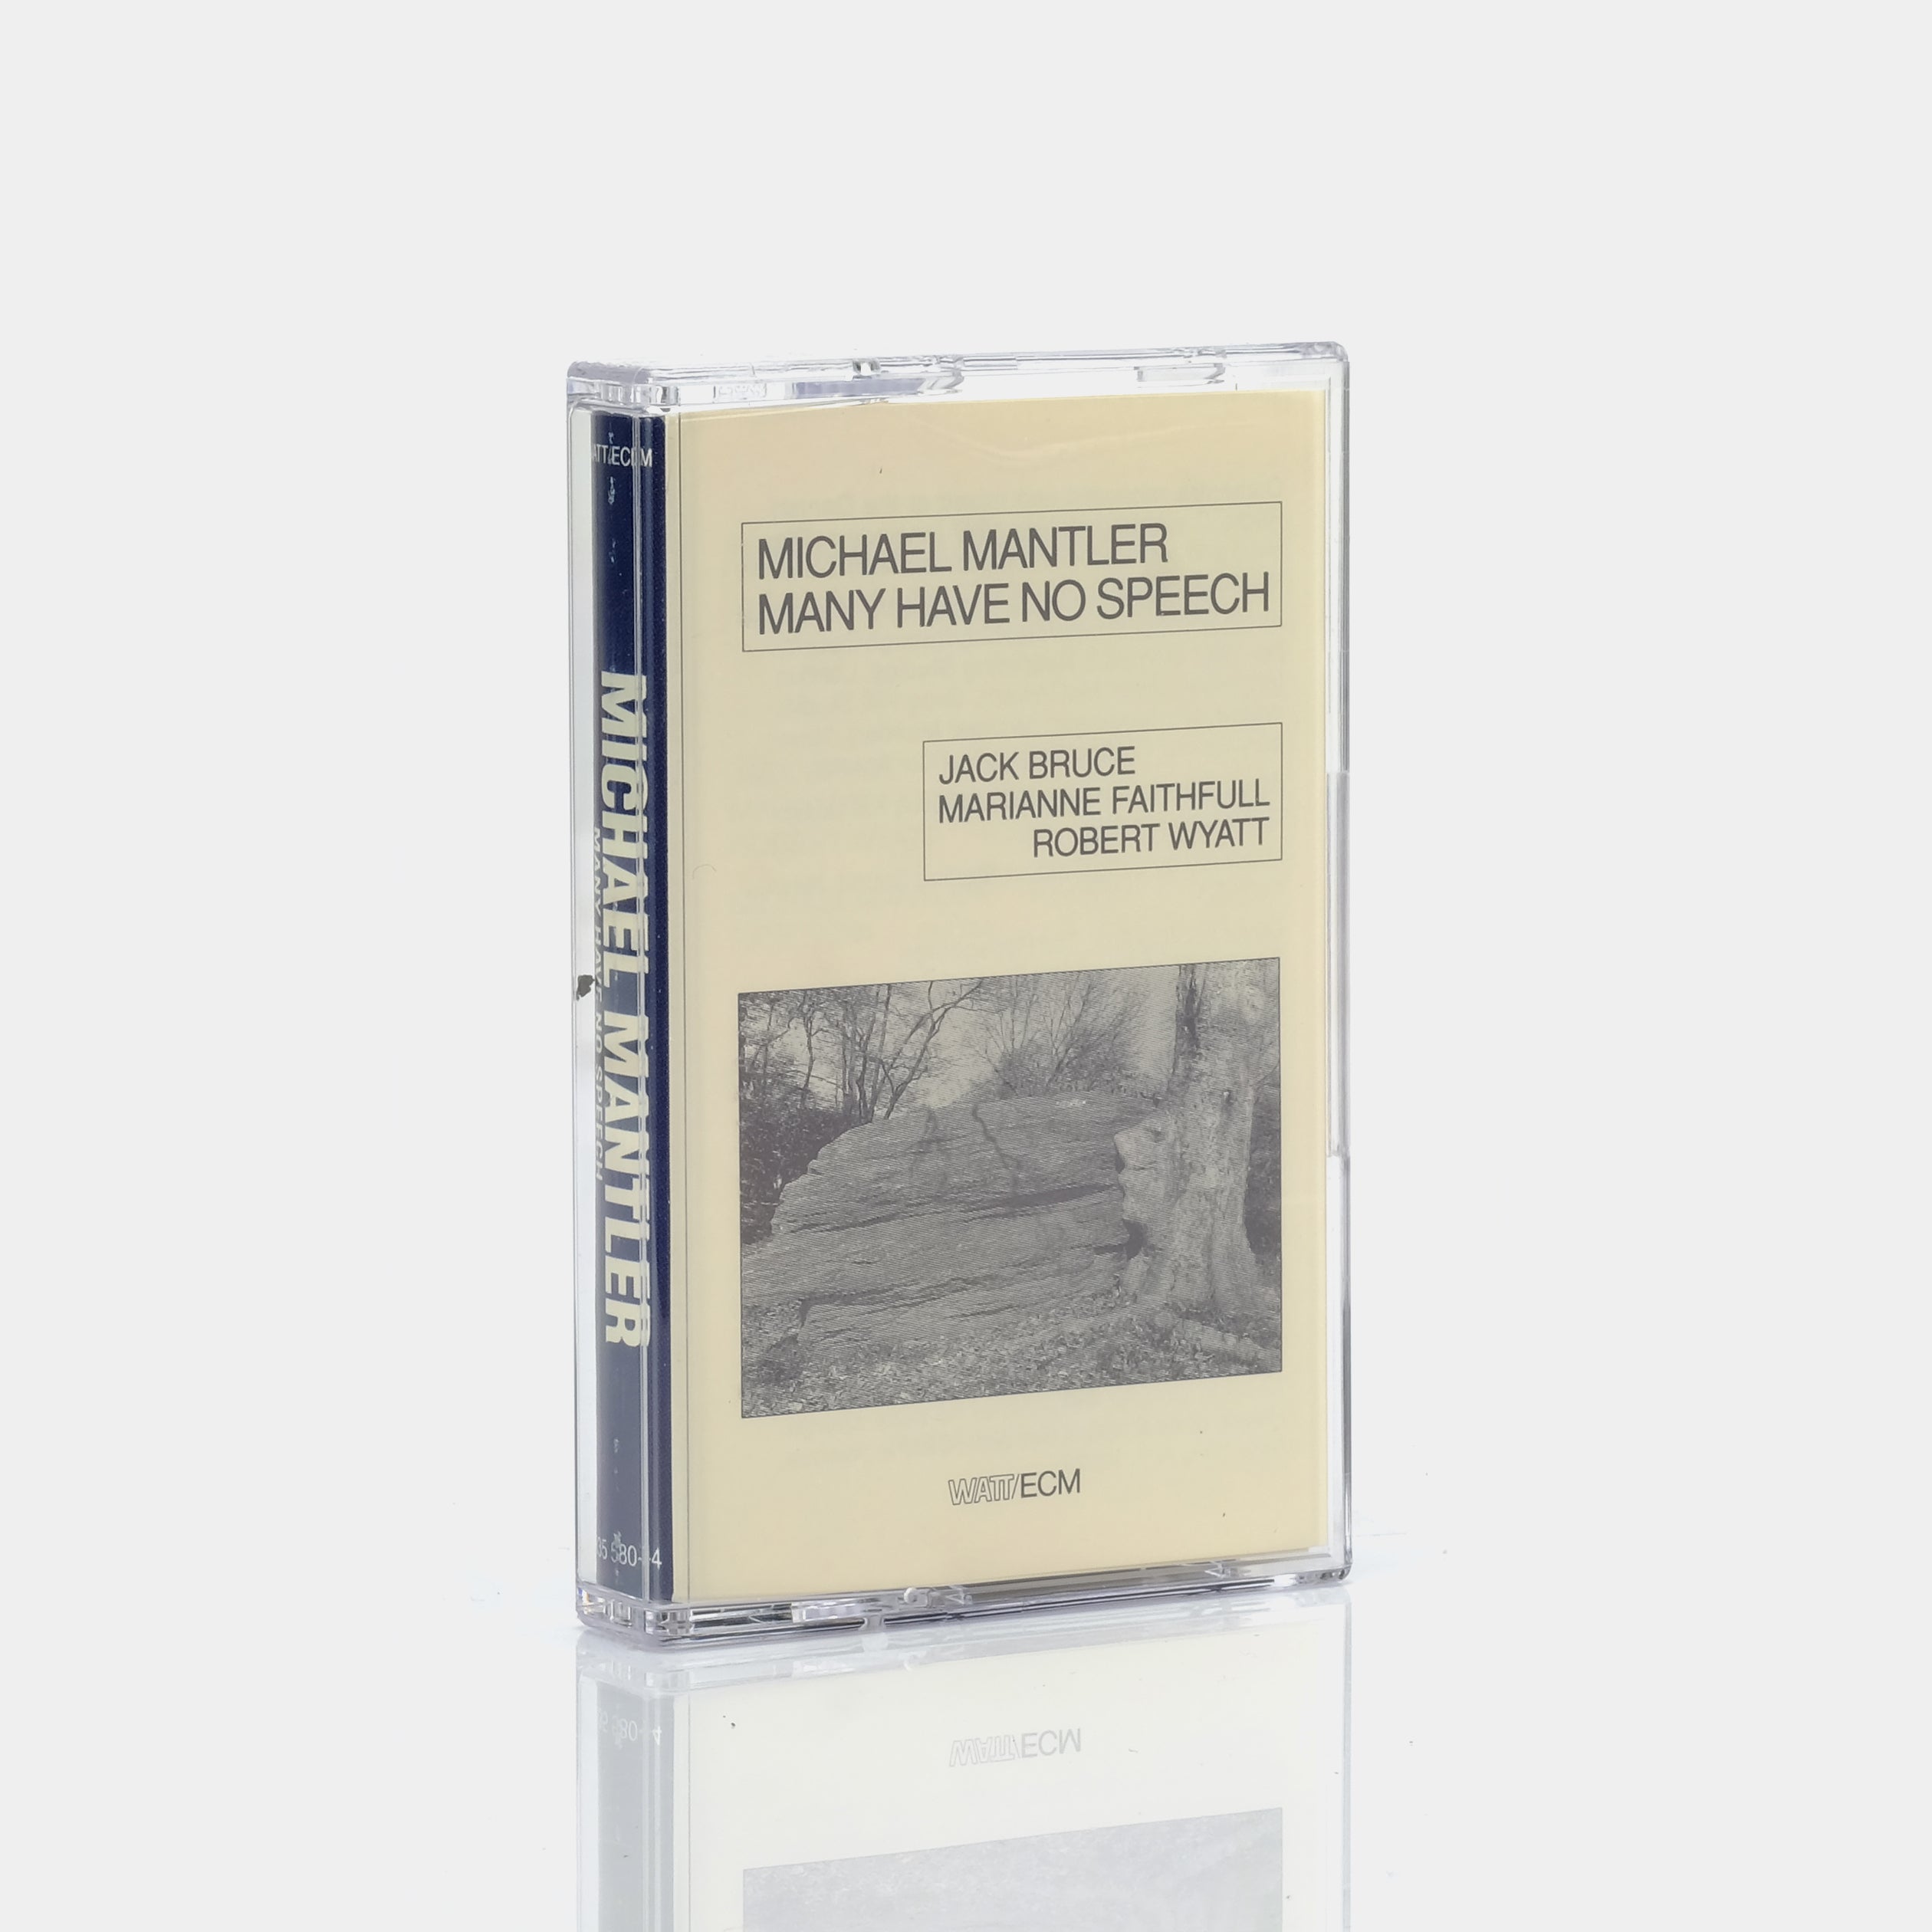 Michael Mantler - Many Have No Speech Cassette Tape